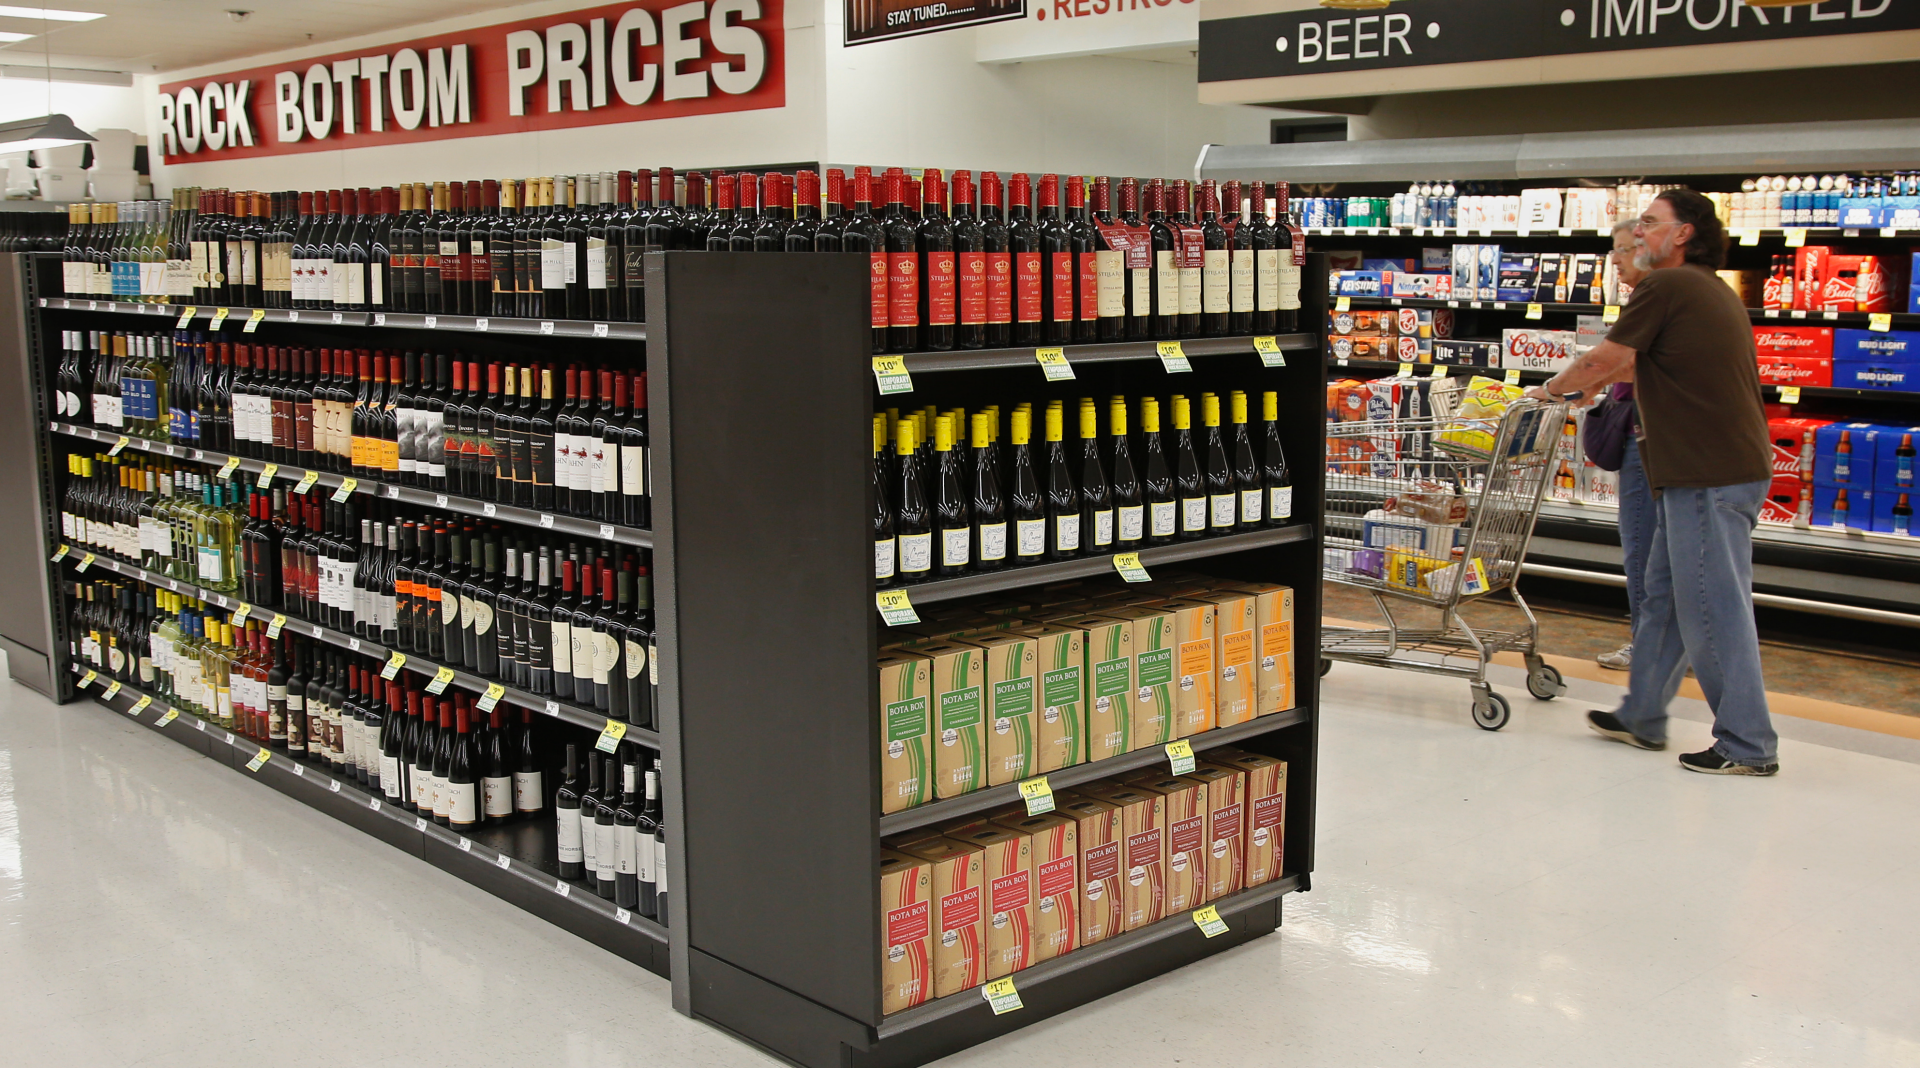 Consumer prices. Go алкоголь. Price up.